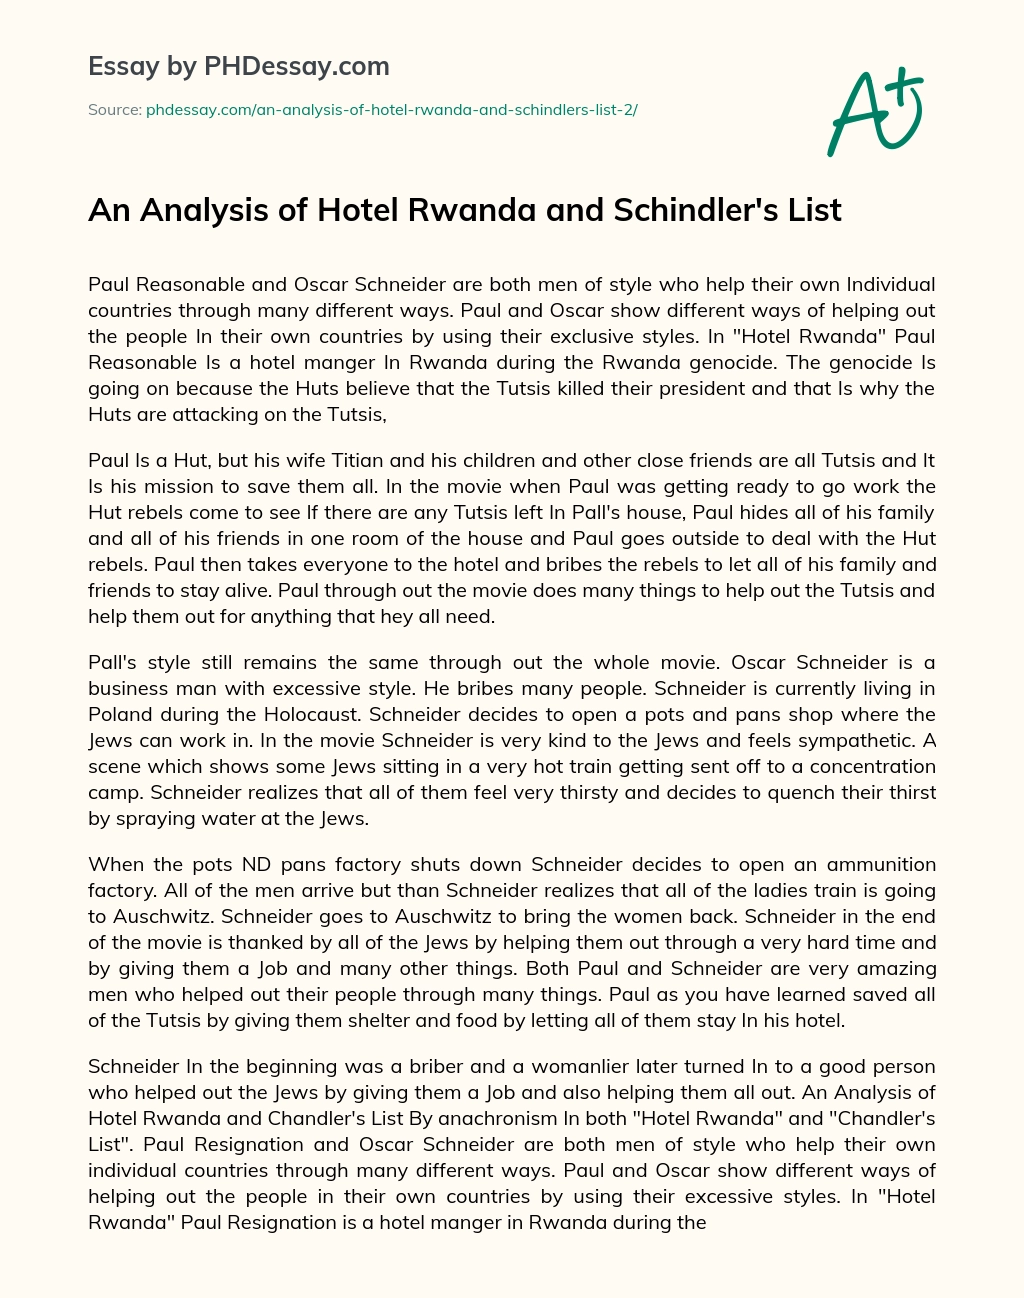 An Analysis of Hotel Rwanda and Schindler’s List essay